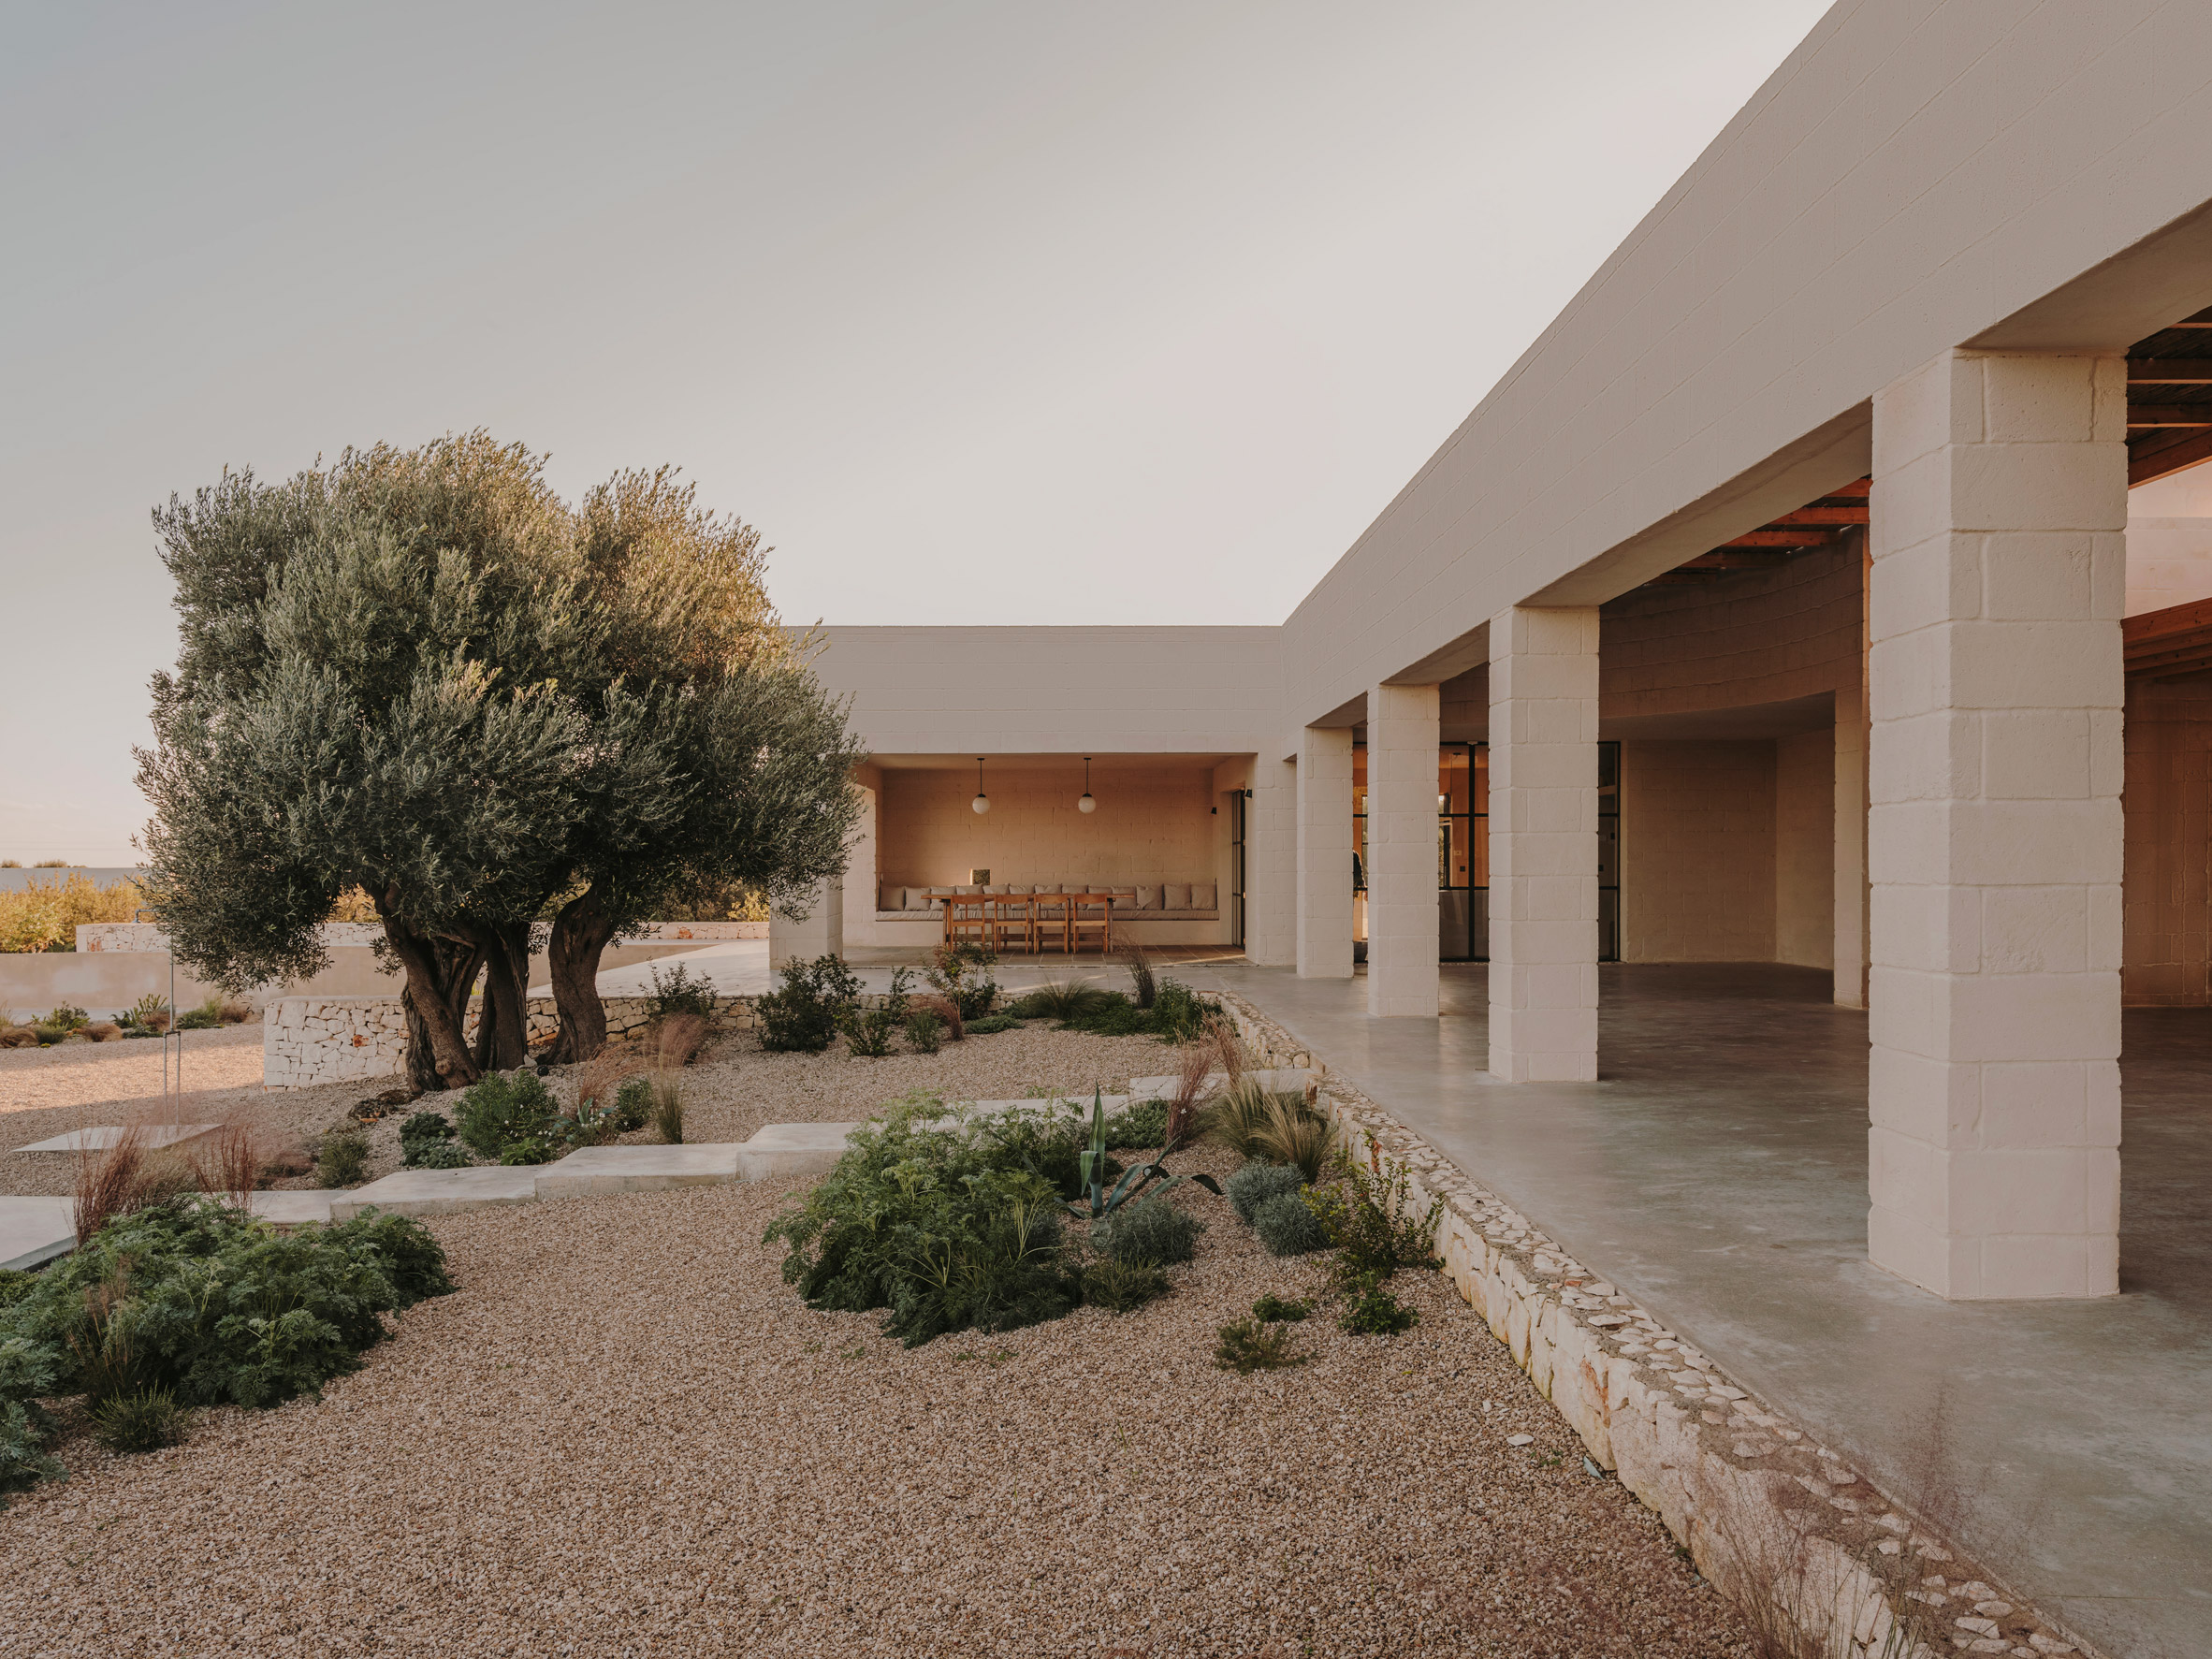 Exterior of Casa Maiora by Studio Andrew Trotter in Puglia